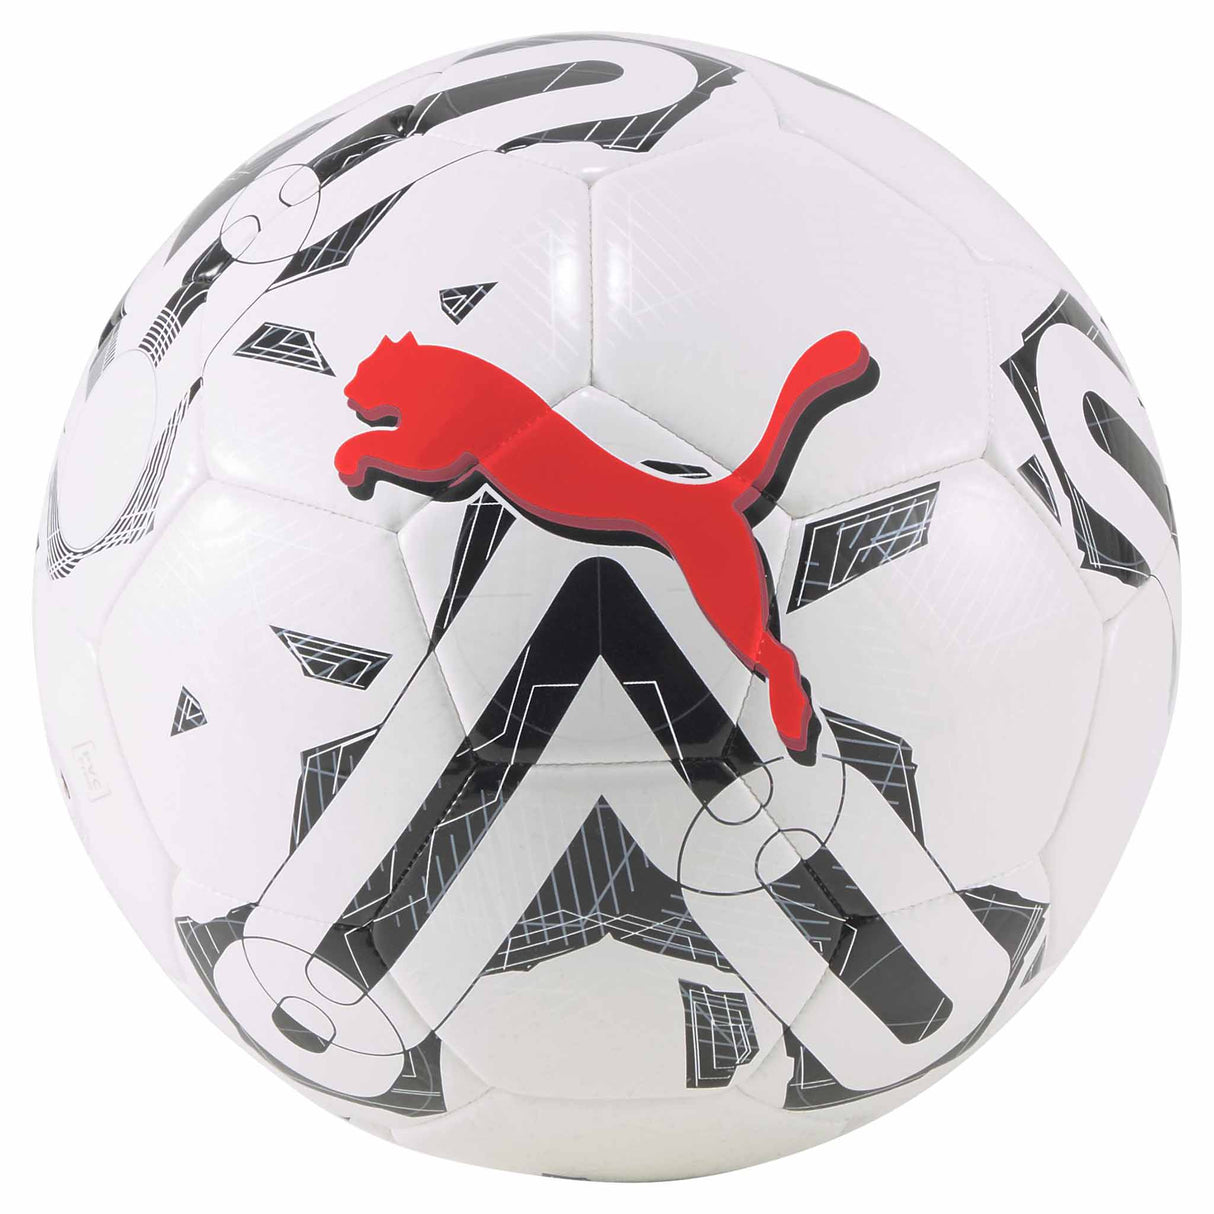 Ballon de soccer Puma Orbita 6 MS - Blanc / Noir / Rouge